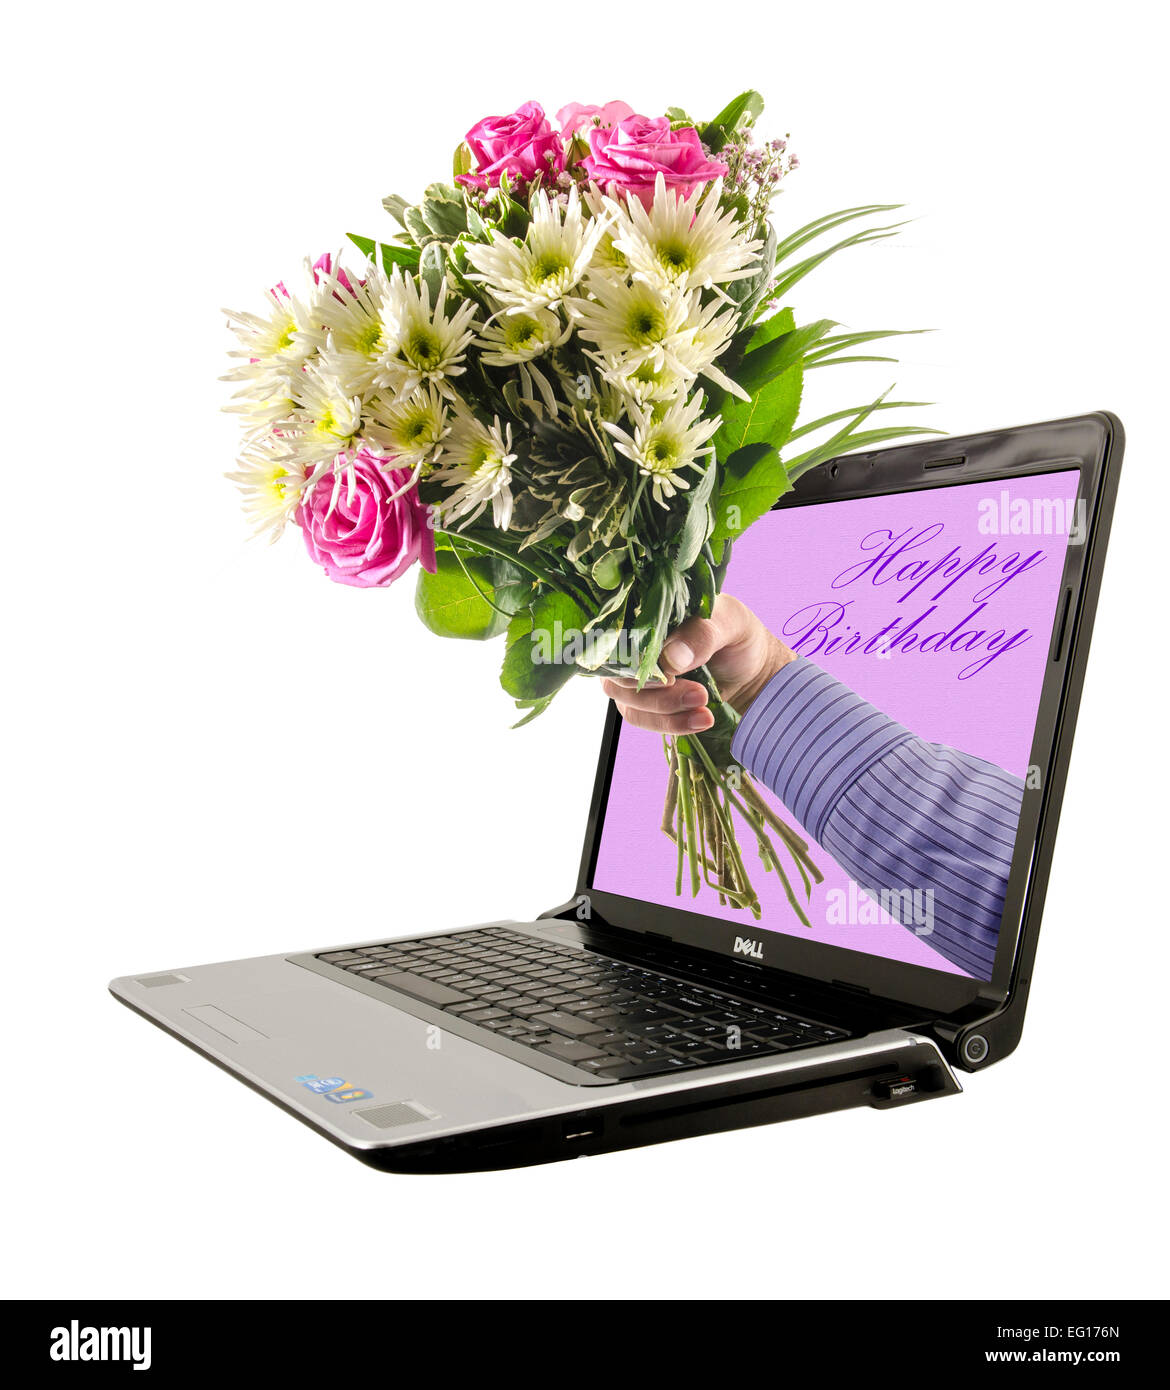 concept image of sending birthday flowers online Stock Photo